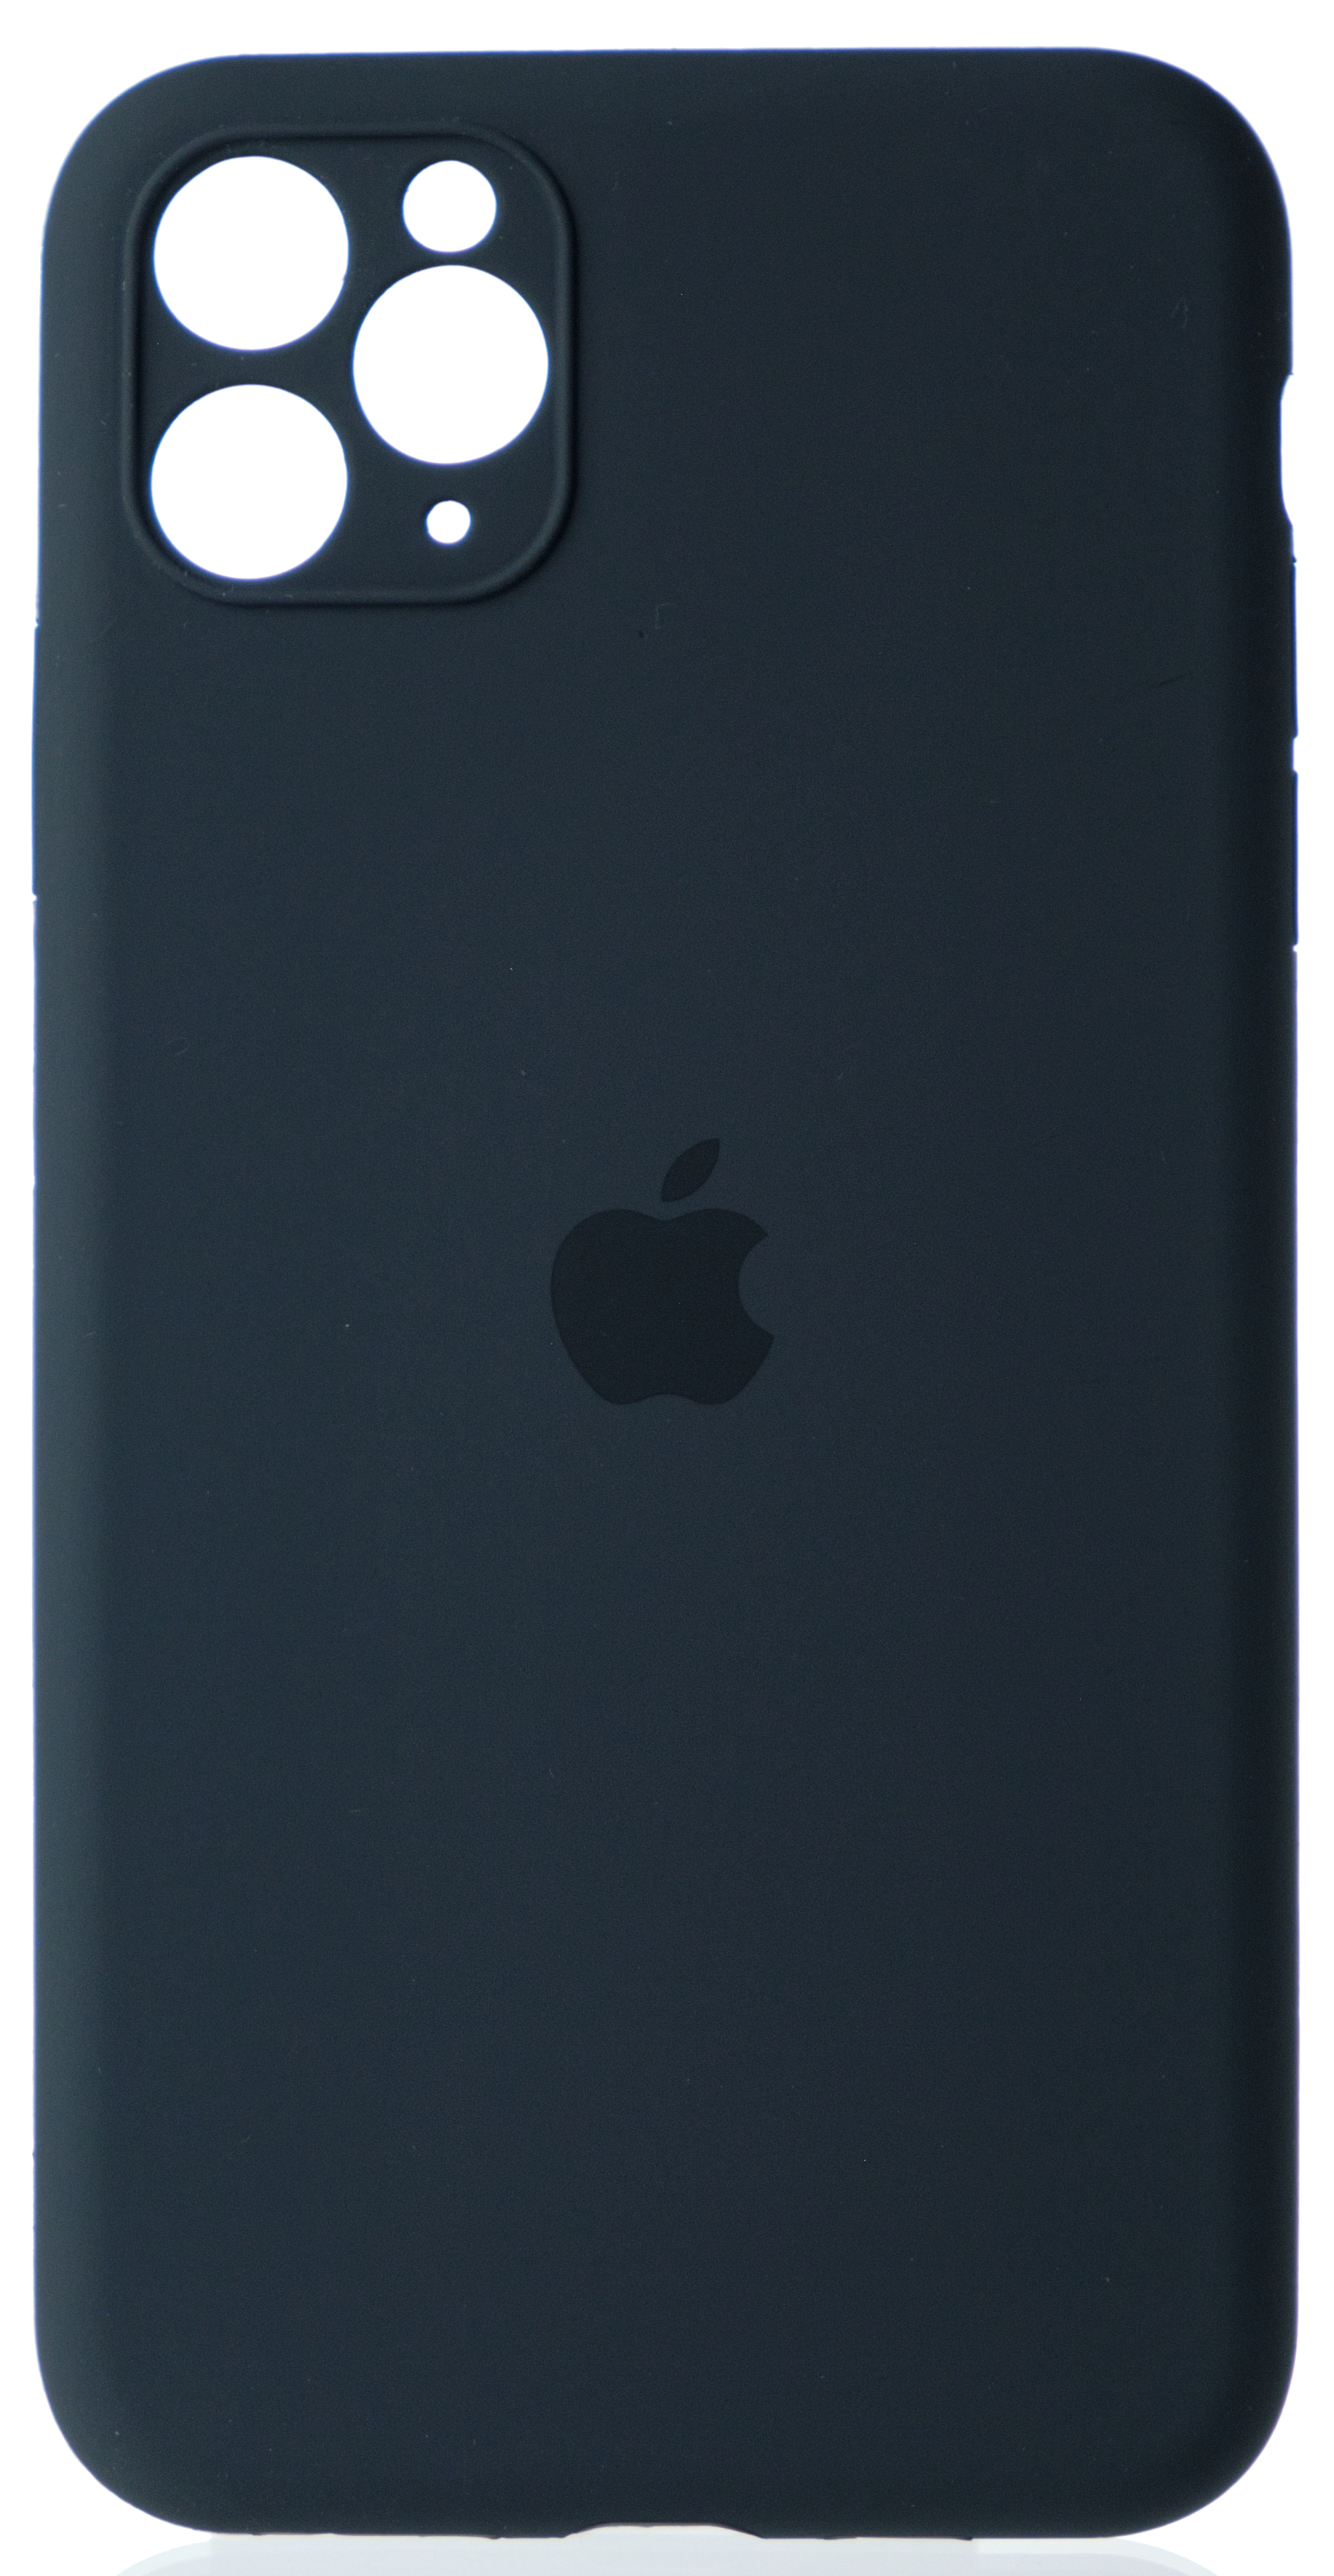 Чехол Silicone Case полная защита для iPhone 11 Pro Max темно-серый